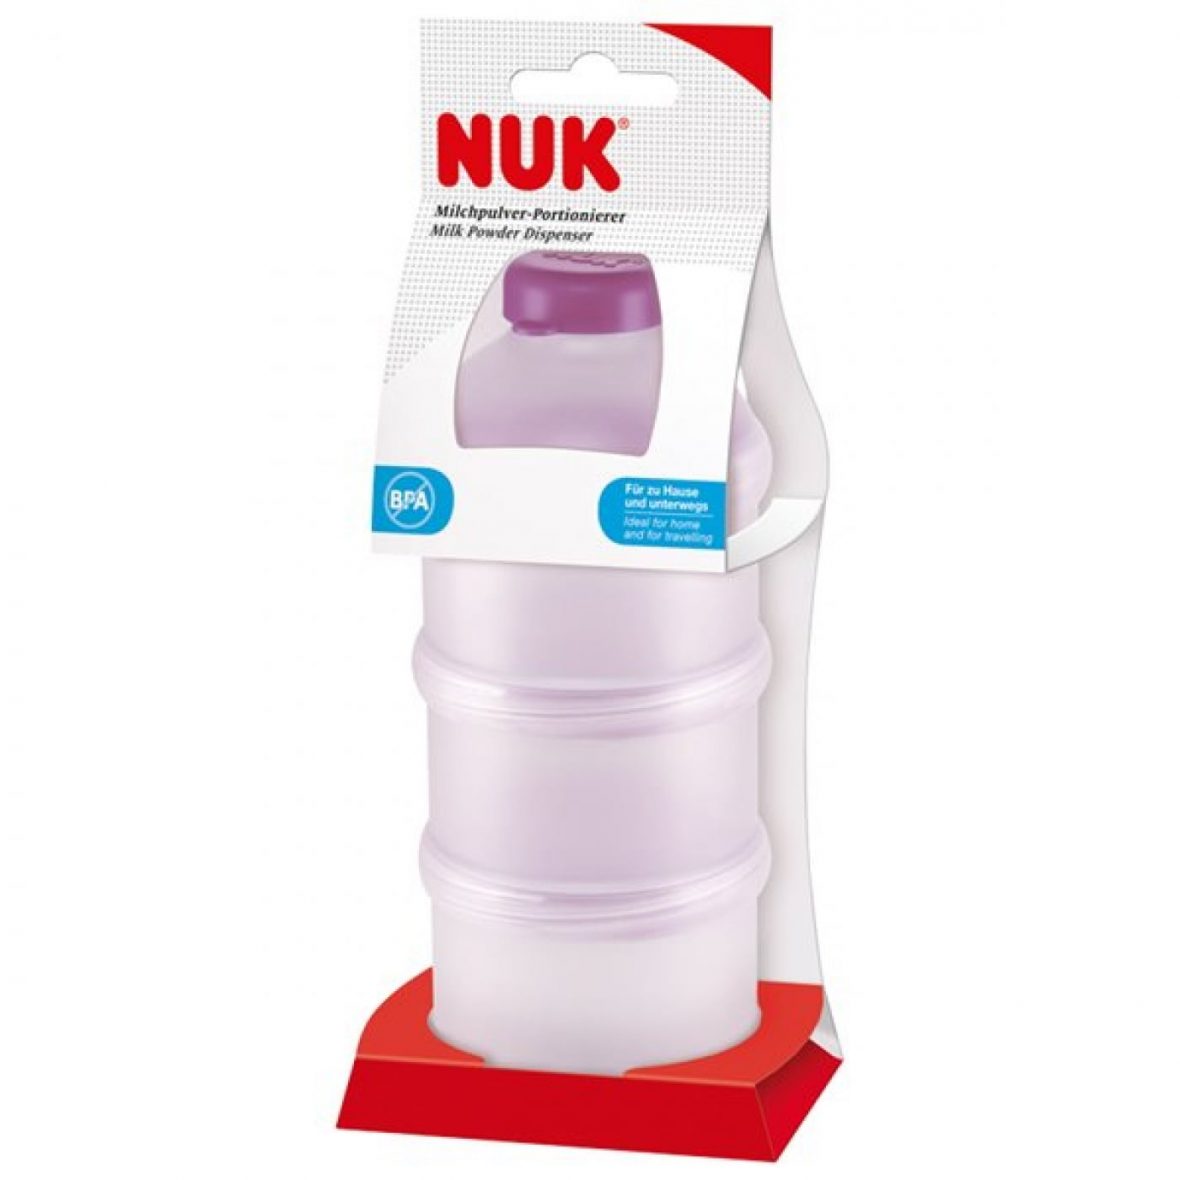 NUK Milk Powder Dispenser